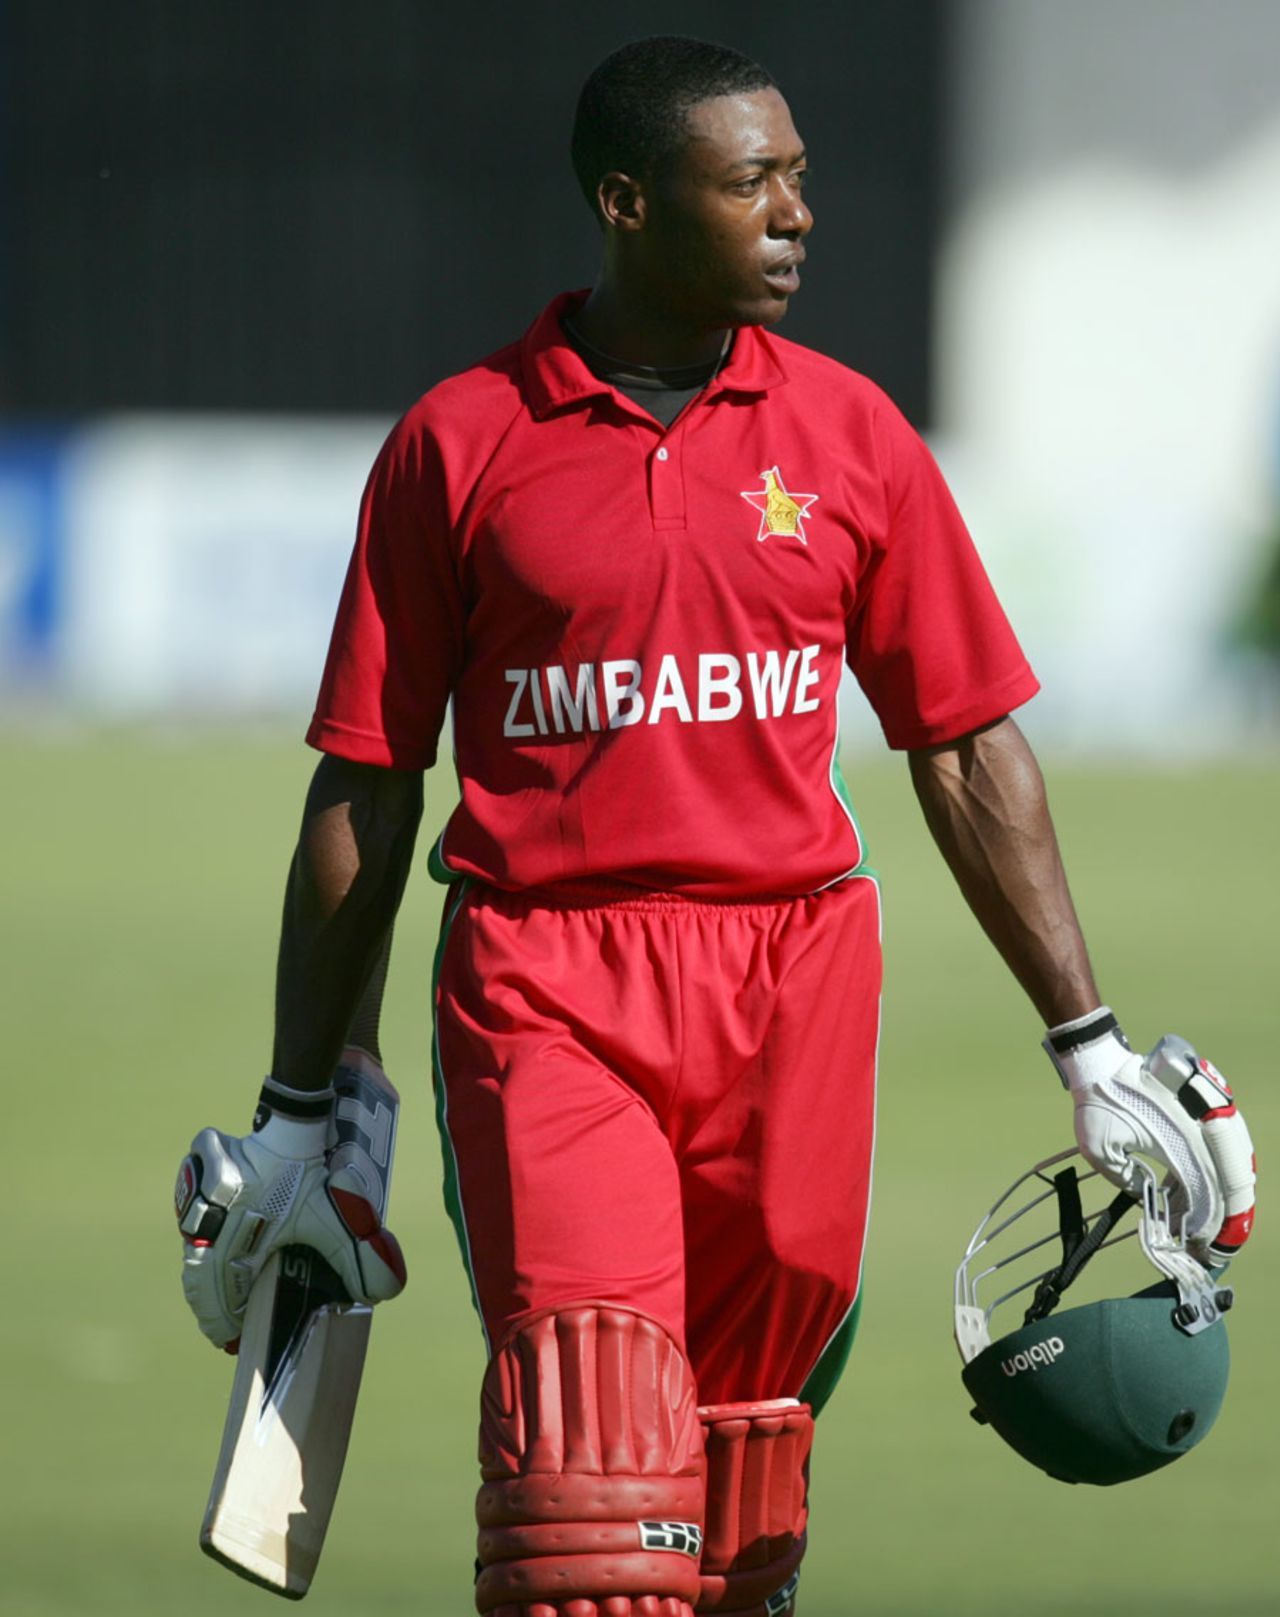 Vusi Sibanda walks back after scoring 54, Zimbabwe v Pakistan, 1st ODI, Harare, August 27, 2013